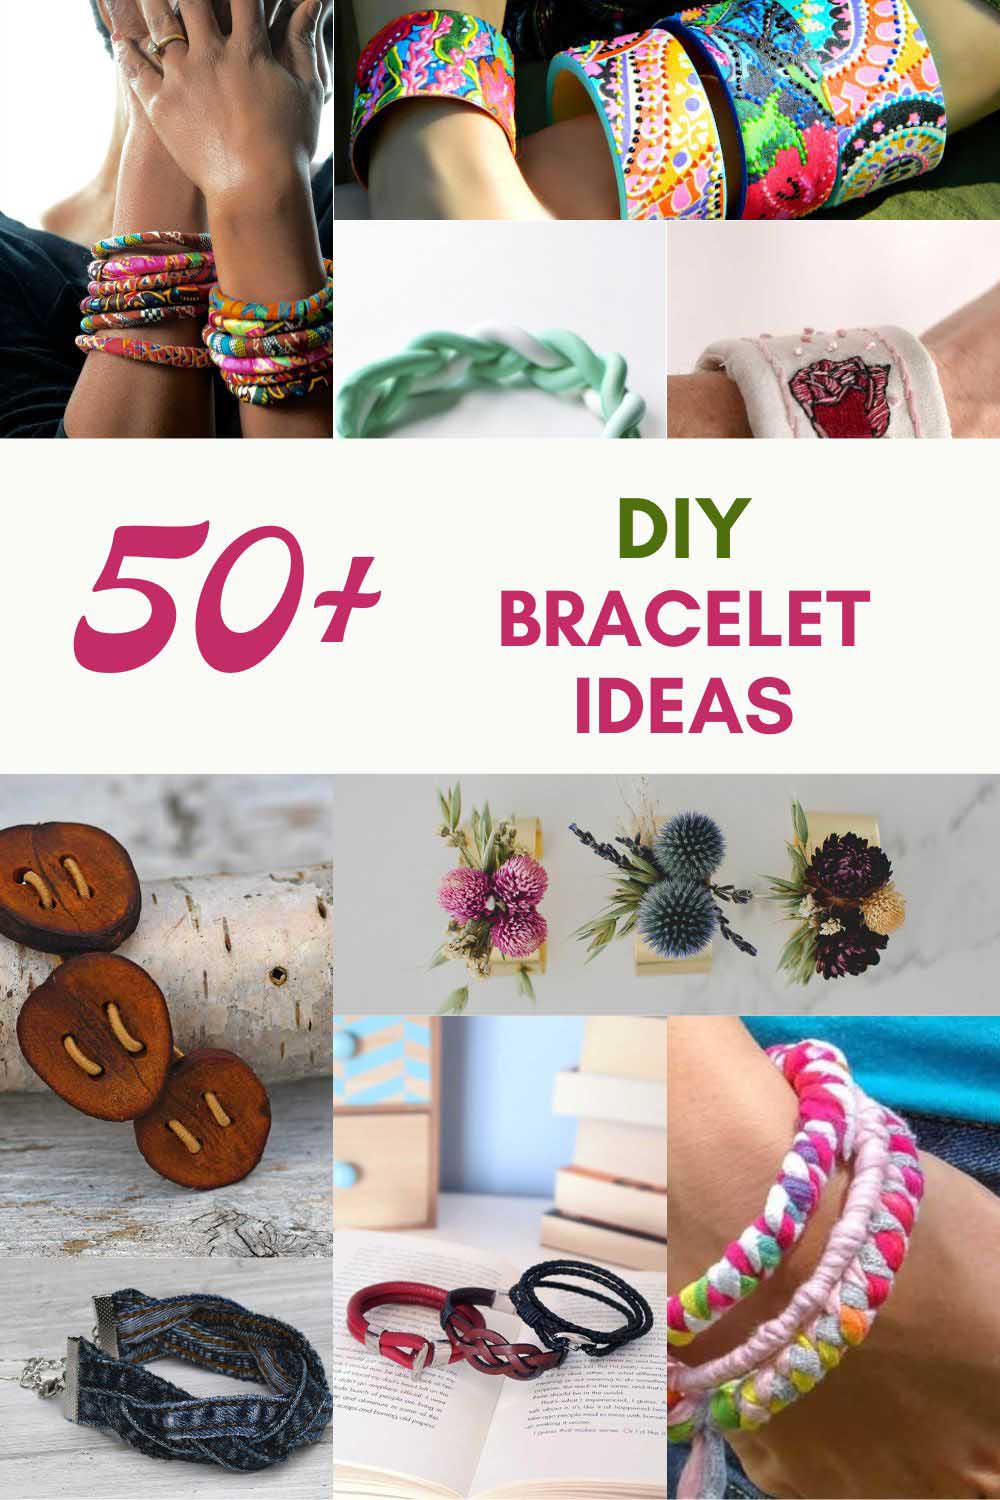 5 Bracelet Ideas, How To Make Bracelets